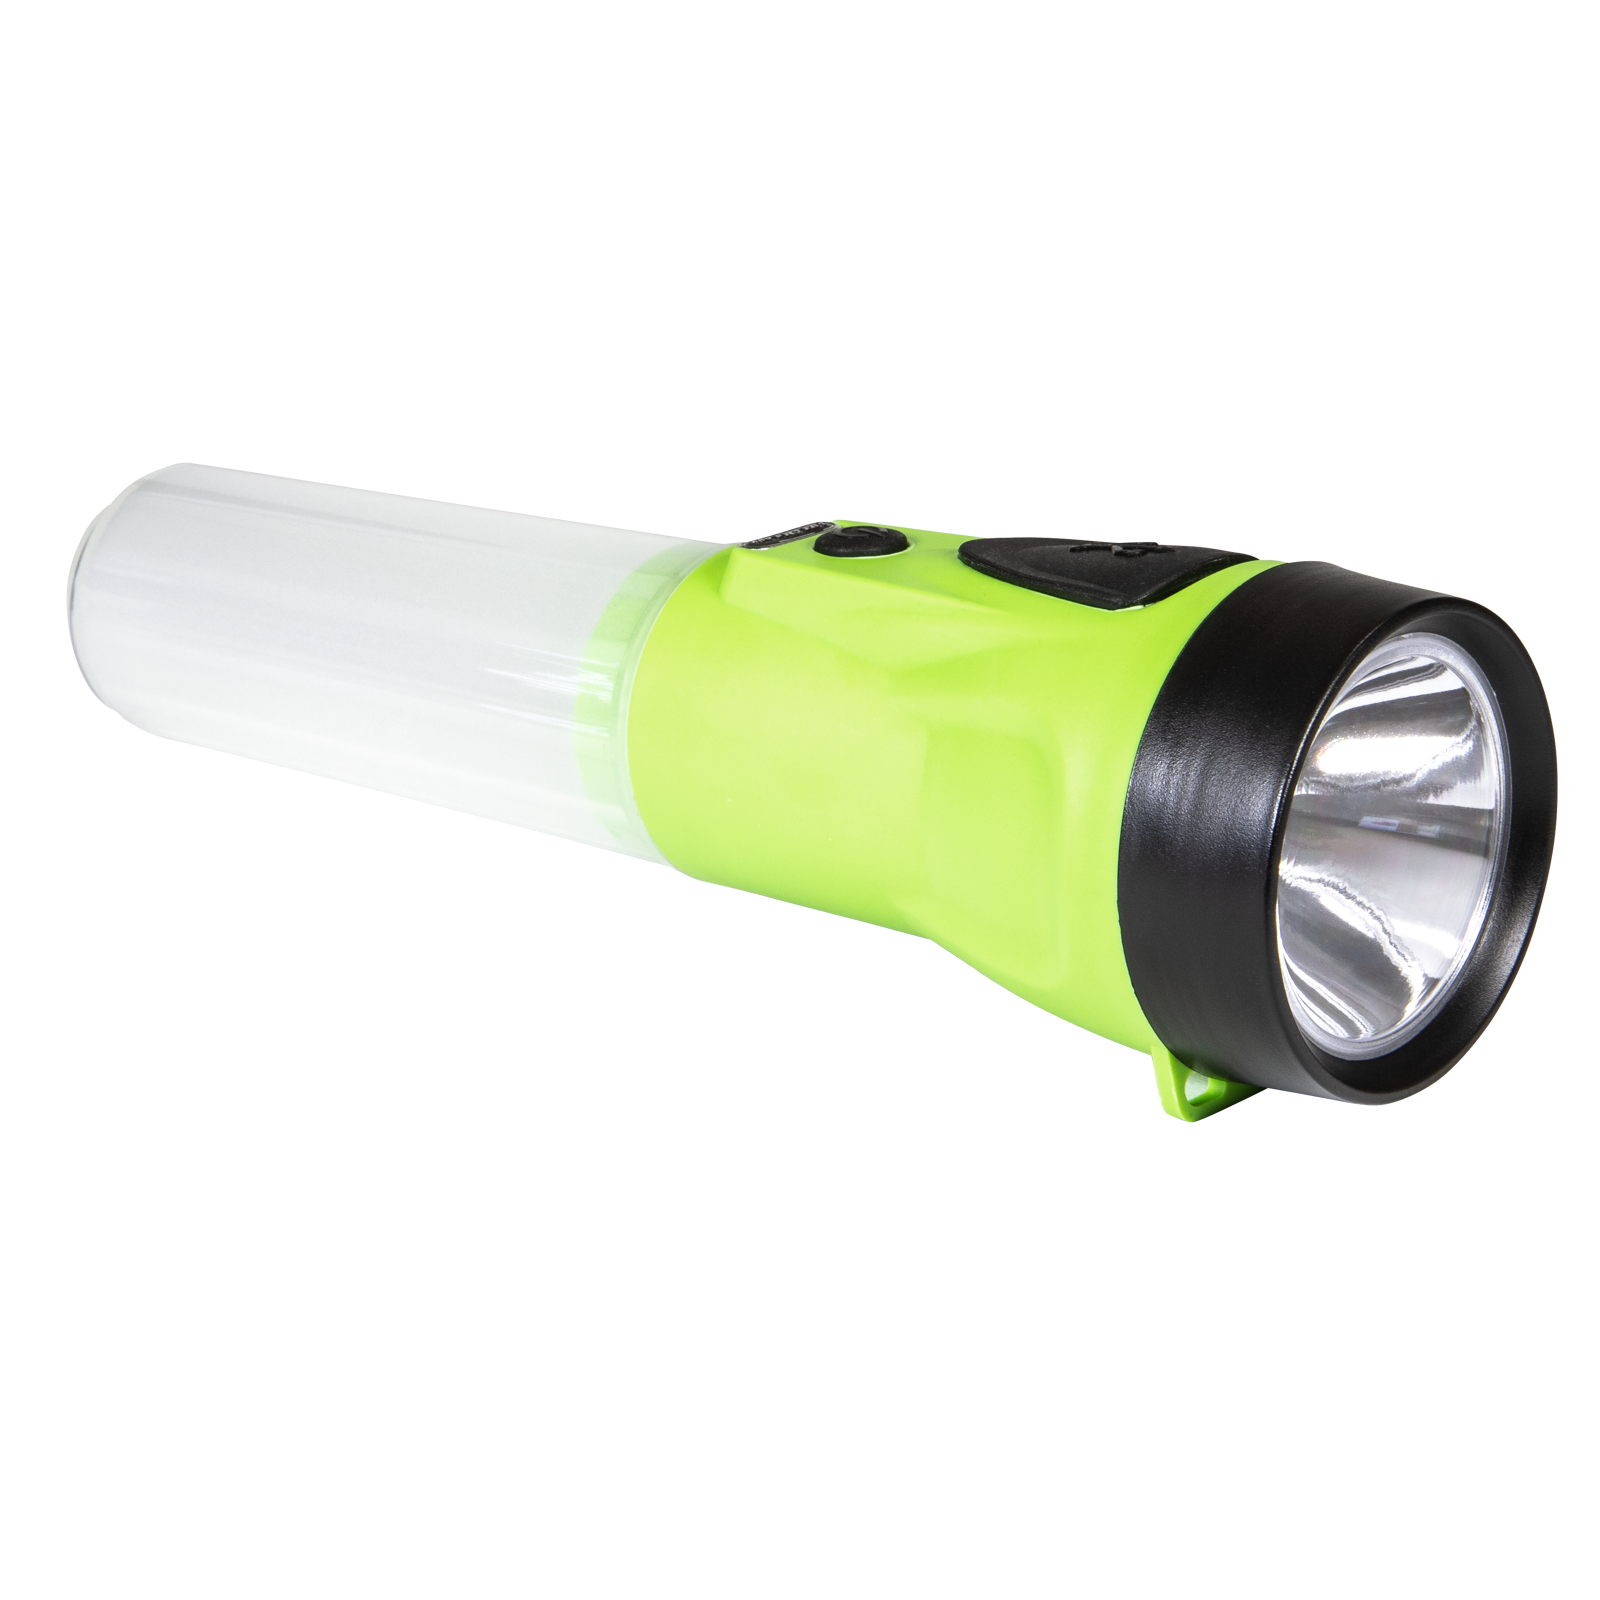 At søge tilflugt Trin Splendor LifeGear 220 Lumen USB Rechargeable Adventure Lantern | Dorcy